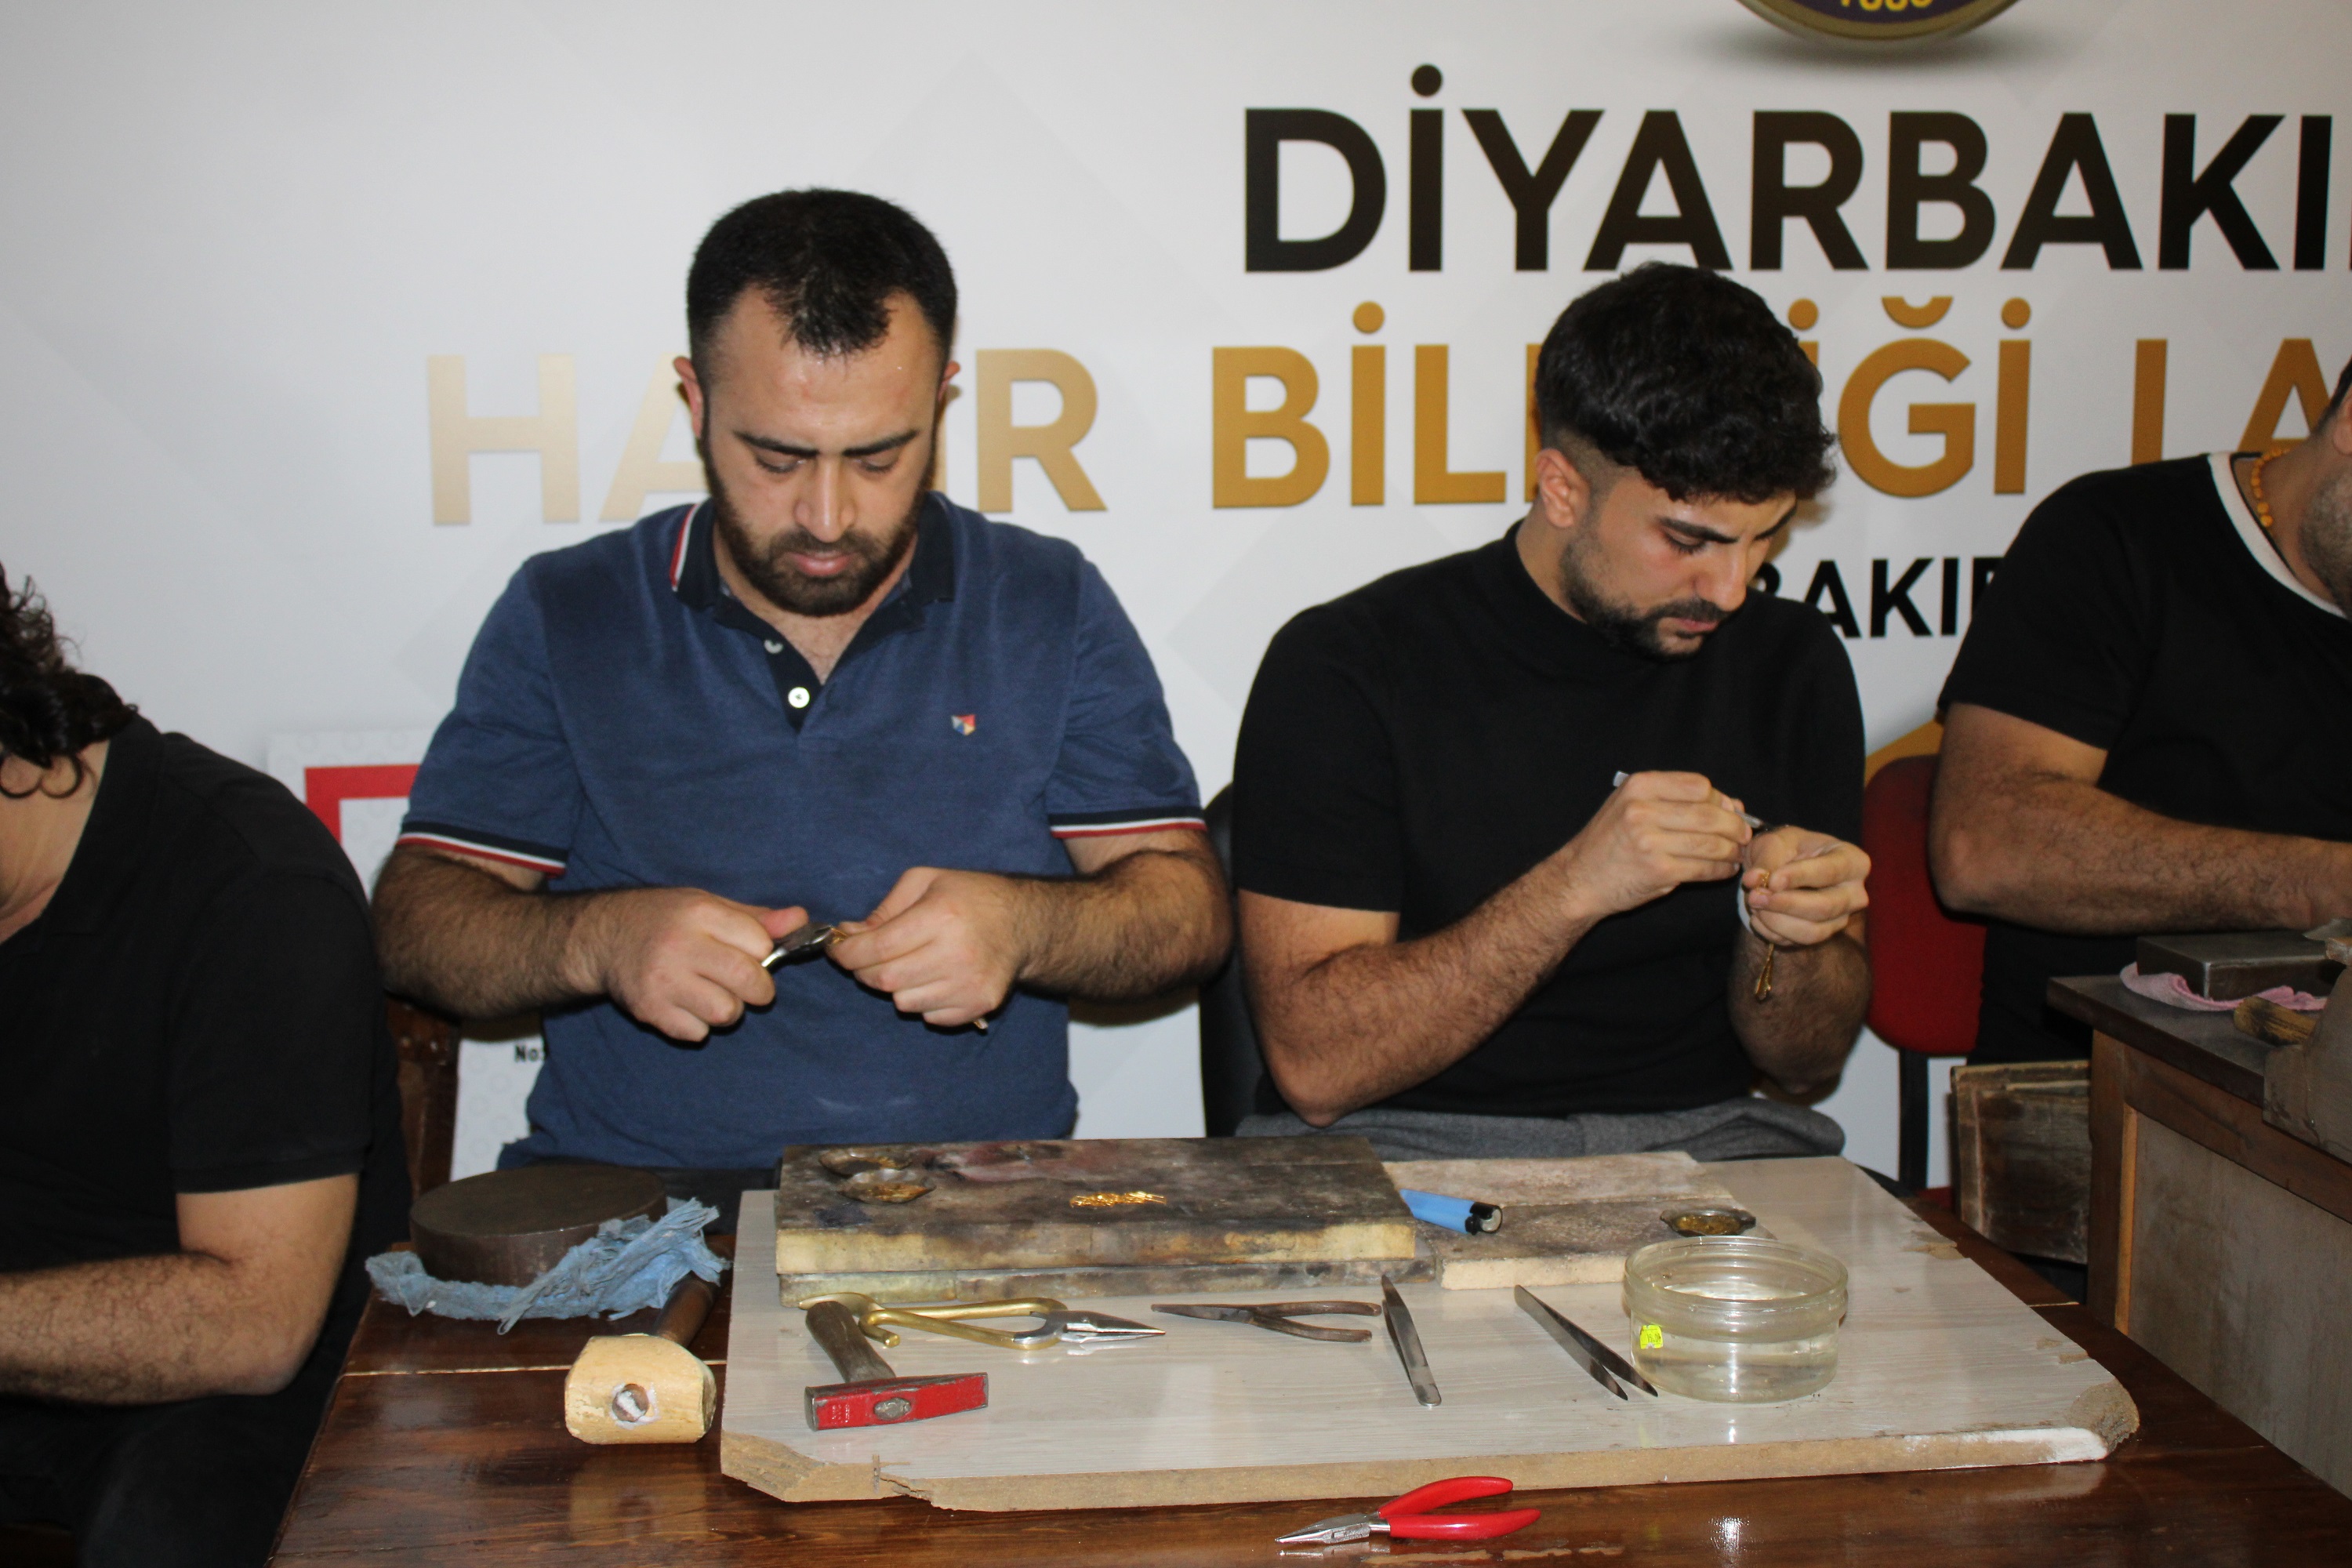 diyarbakir-hasir-bilezigi-cografi-isaretle-tescillendi-9663-dhaphoto4.jpg